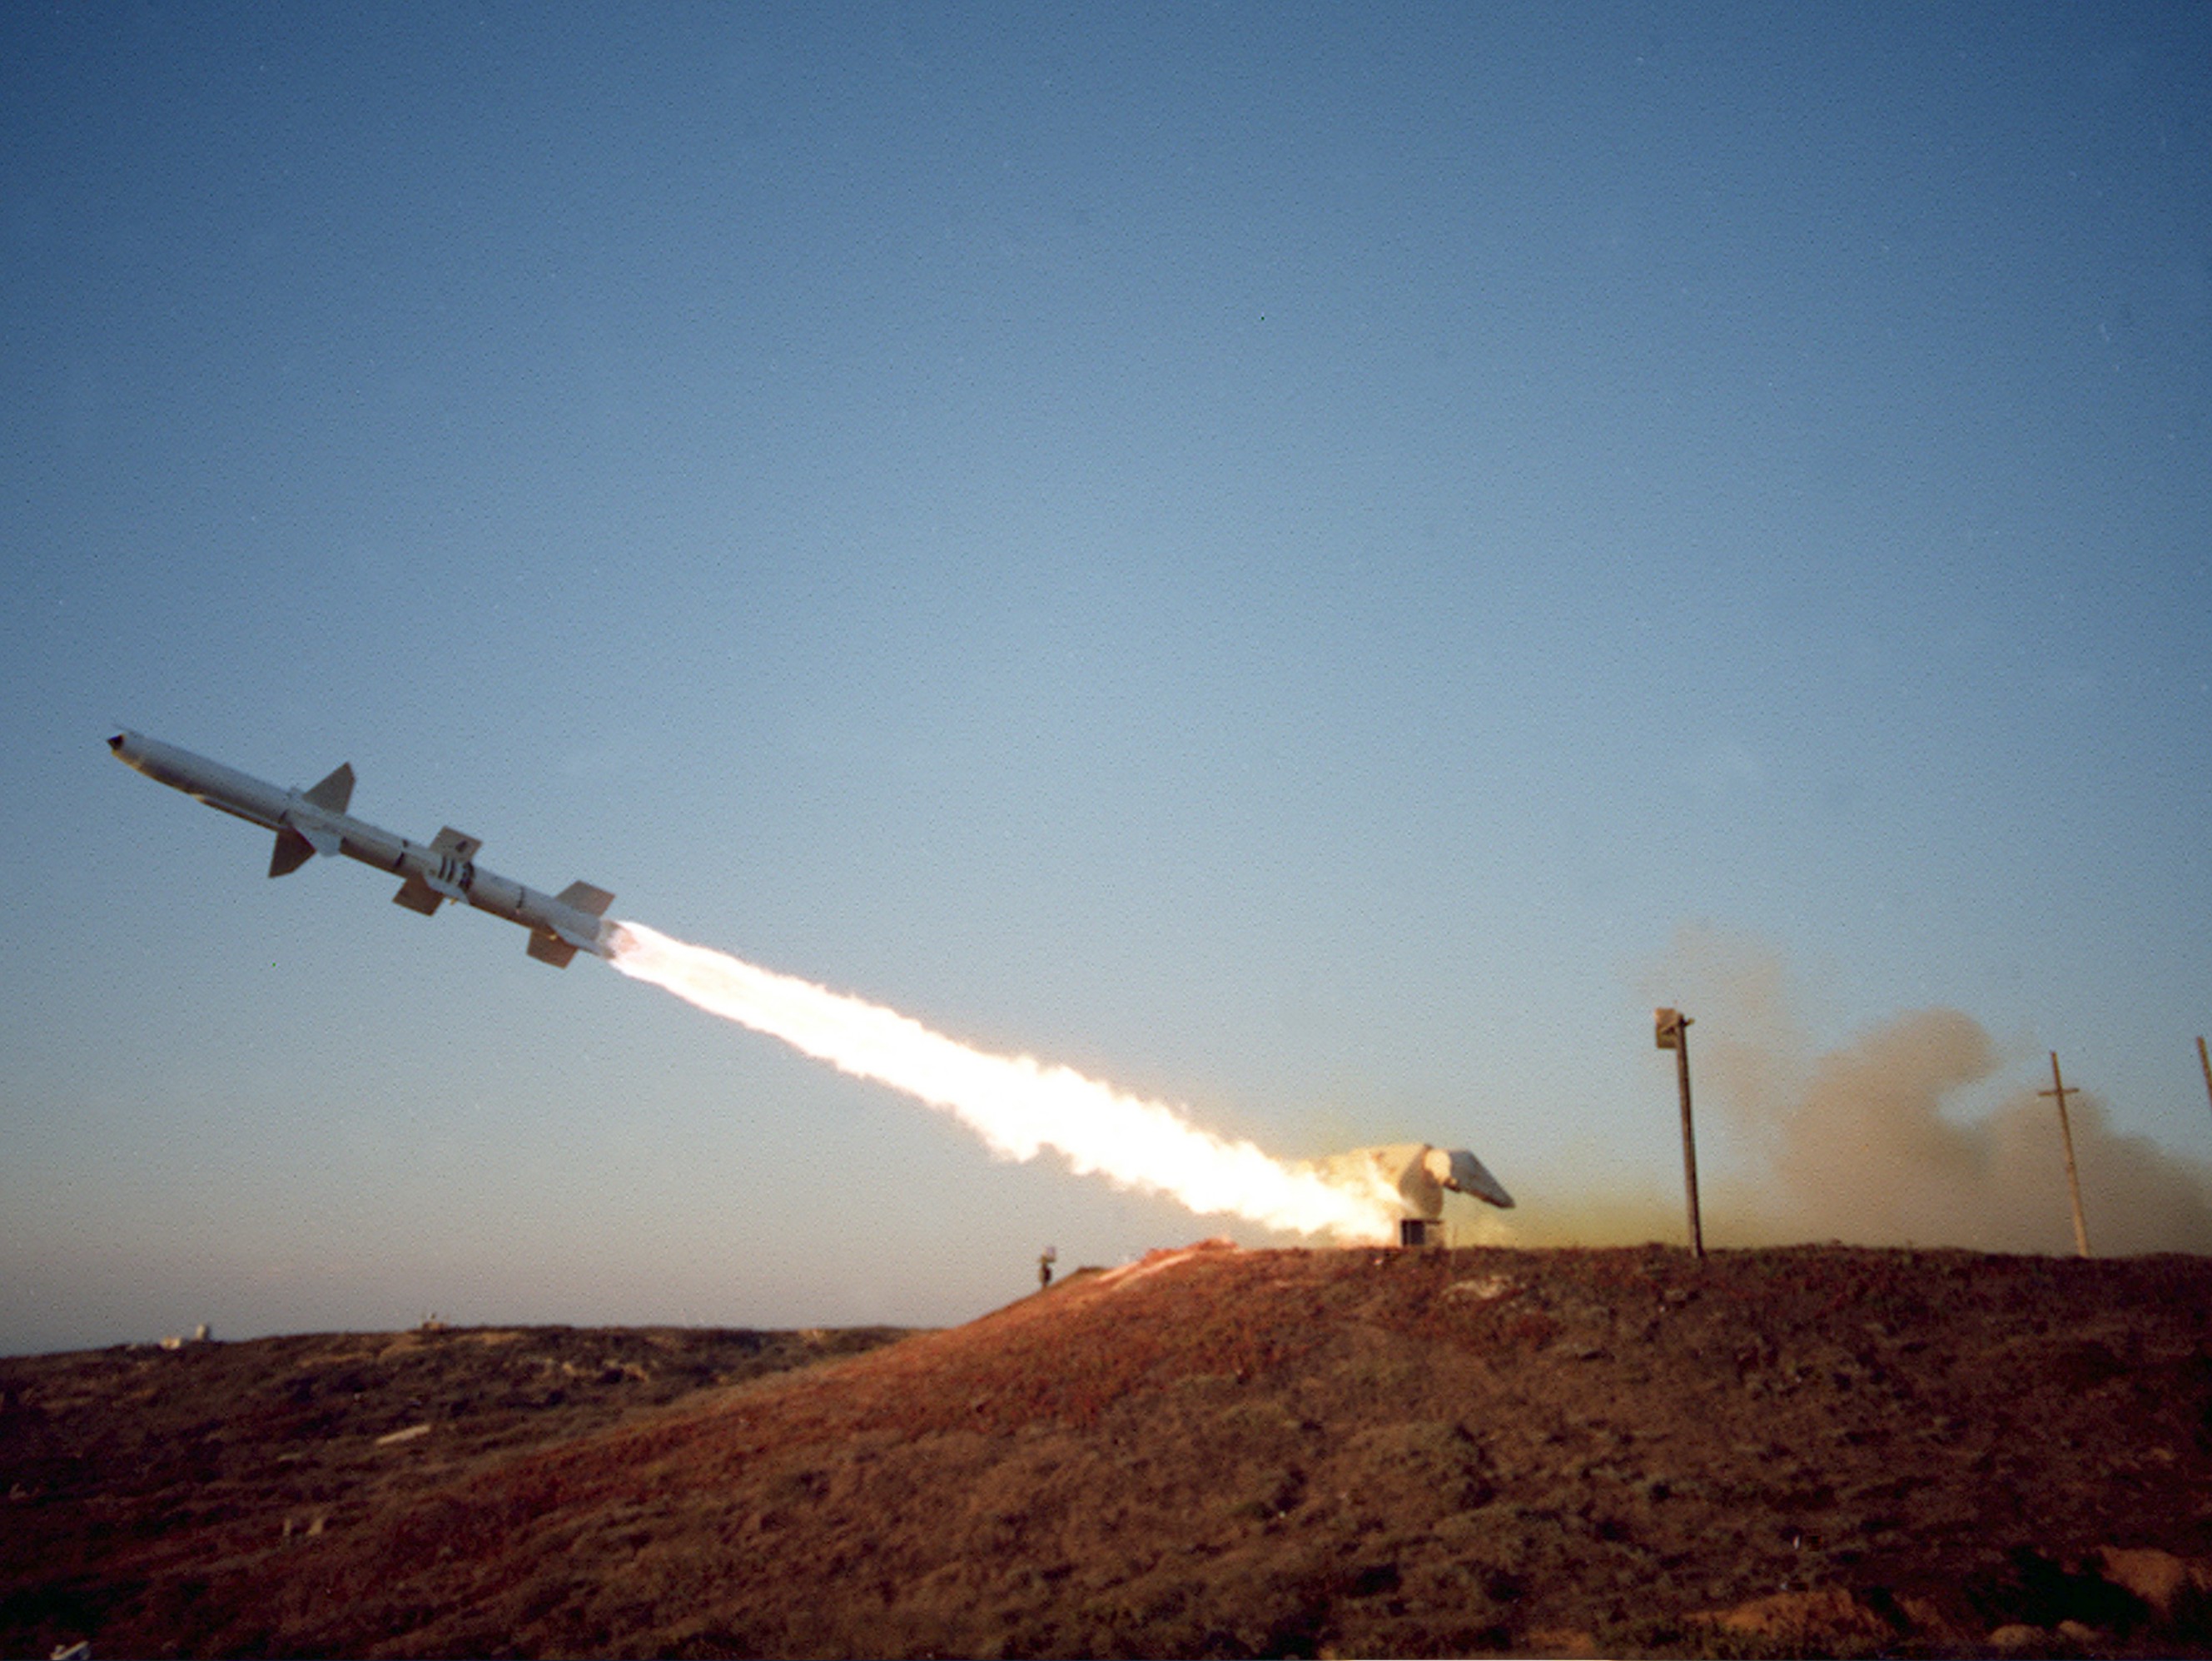 MQM-8G_Vandal_missile_launch_1999.jpg